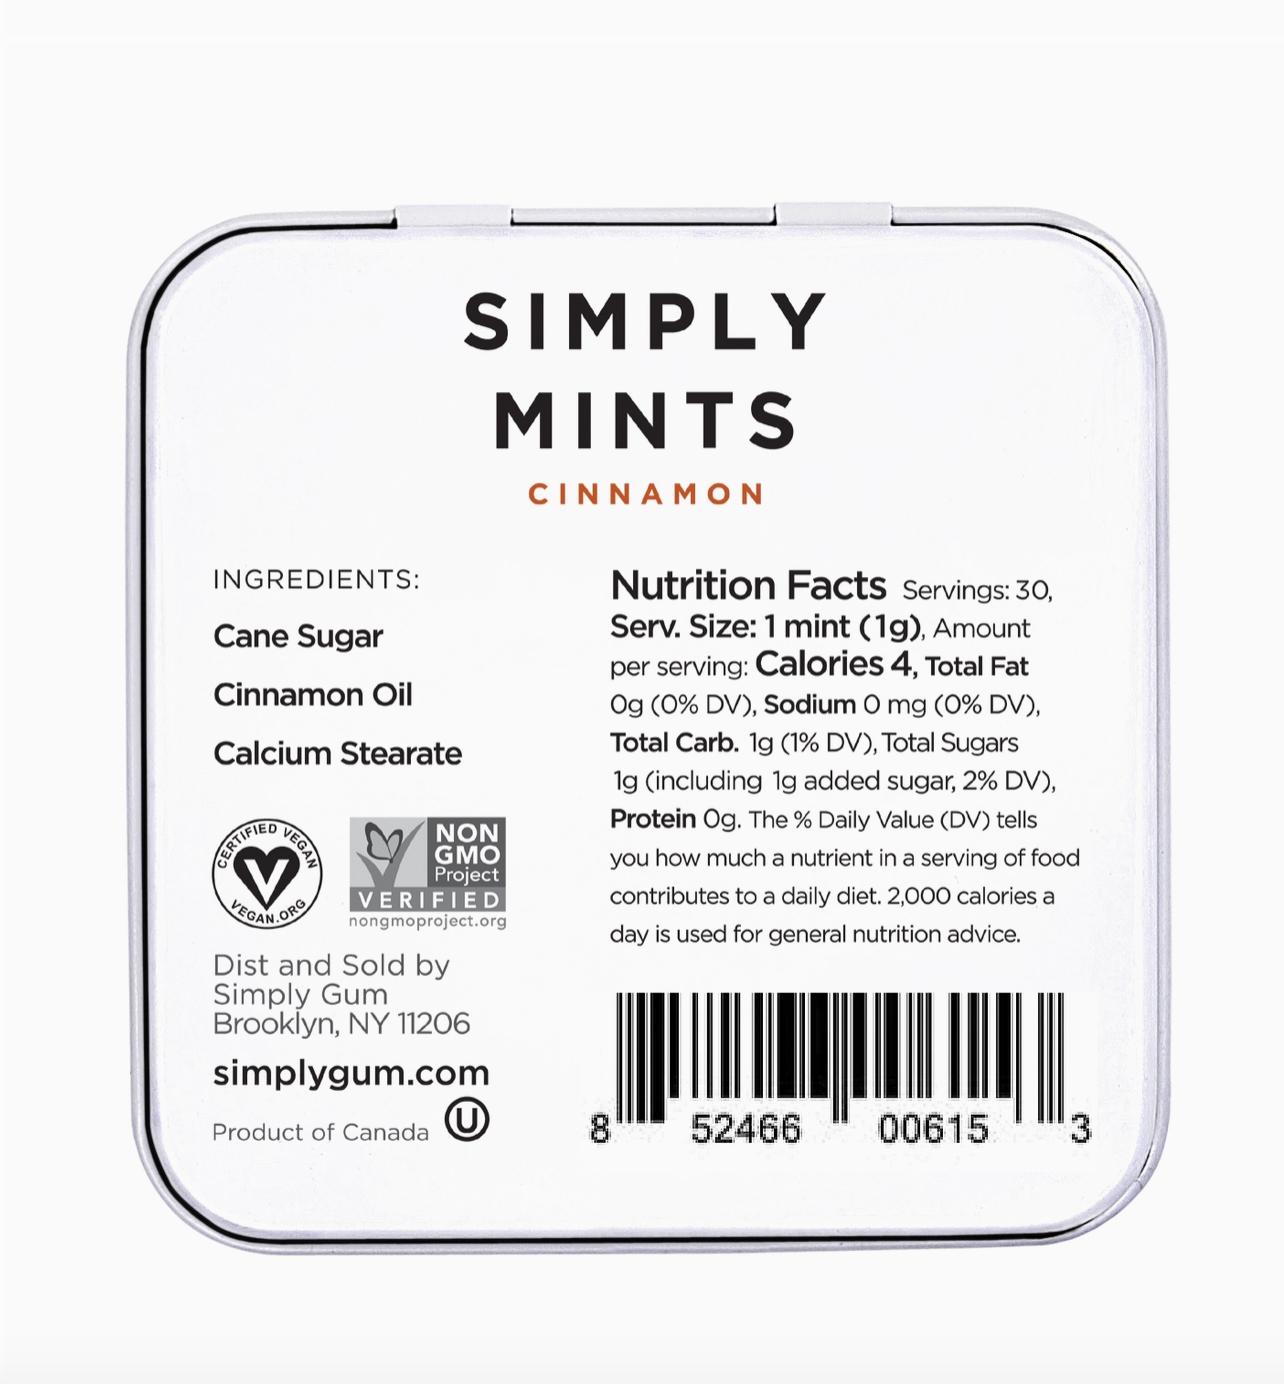 Simply Mints - Cinnamon back